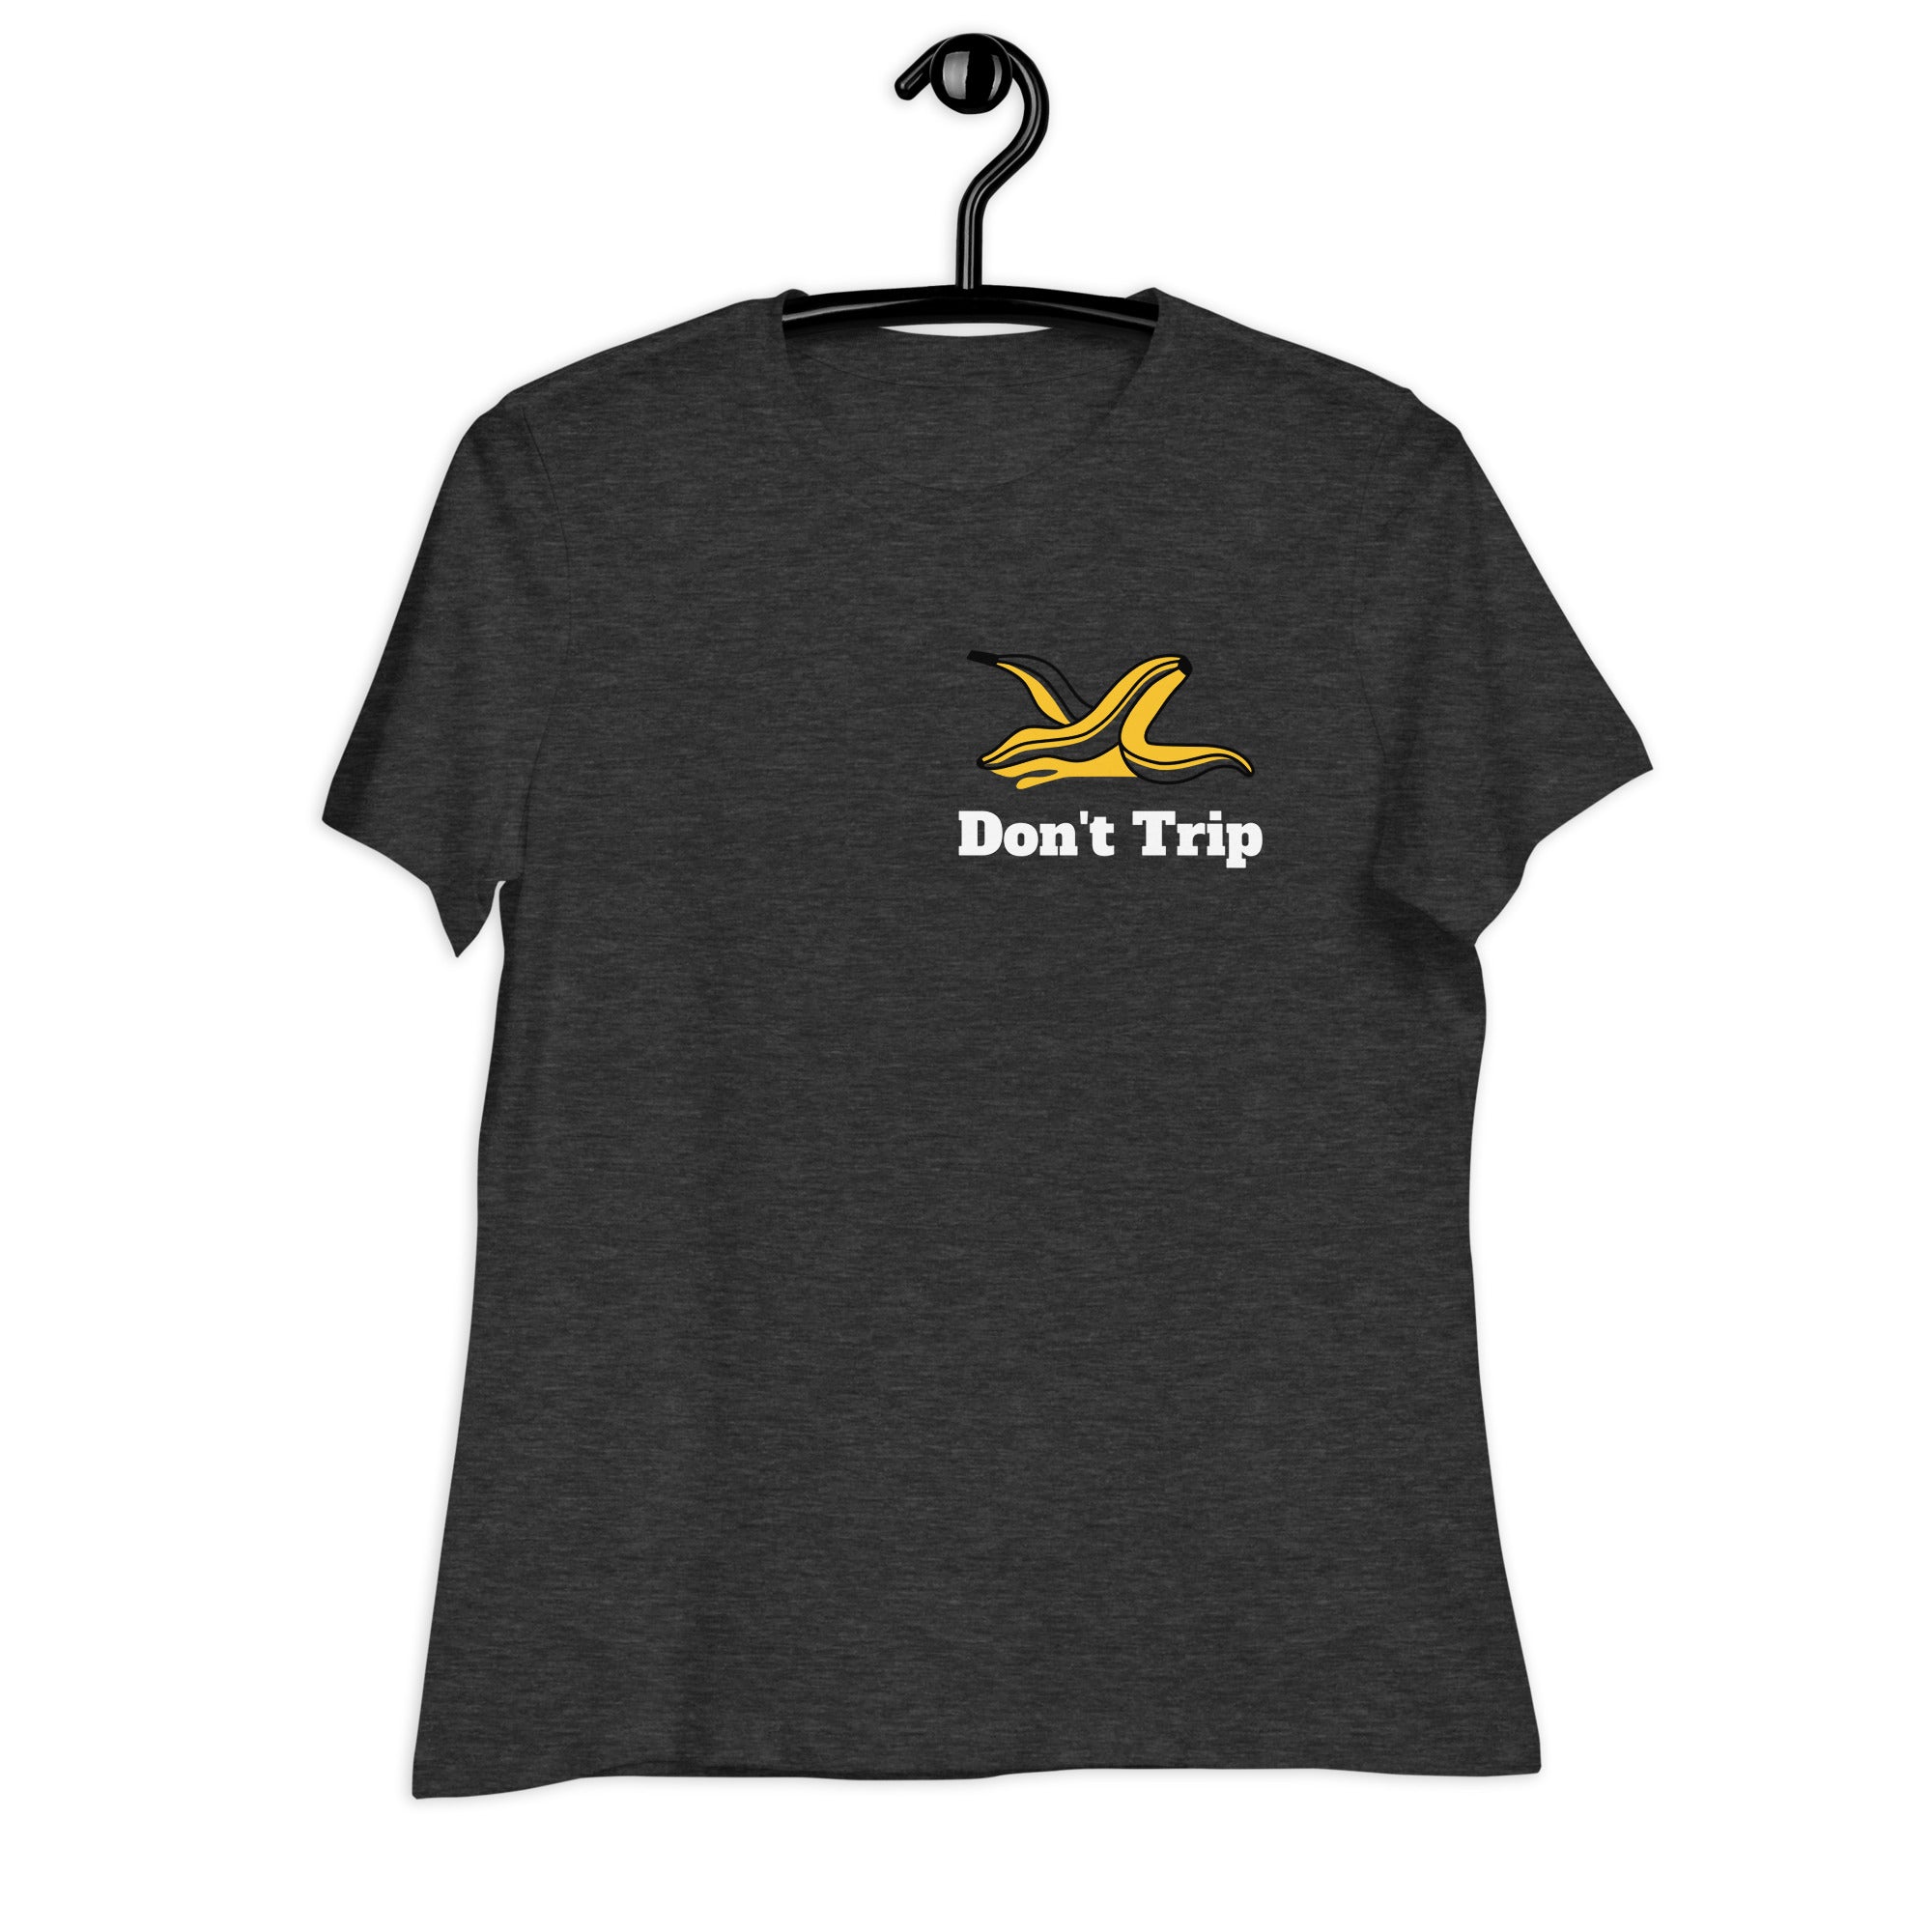 Don't trip-Women's Relaxed T-Shirt